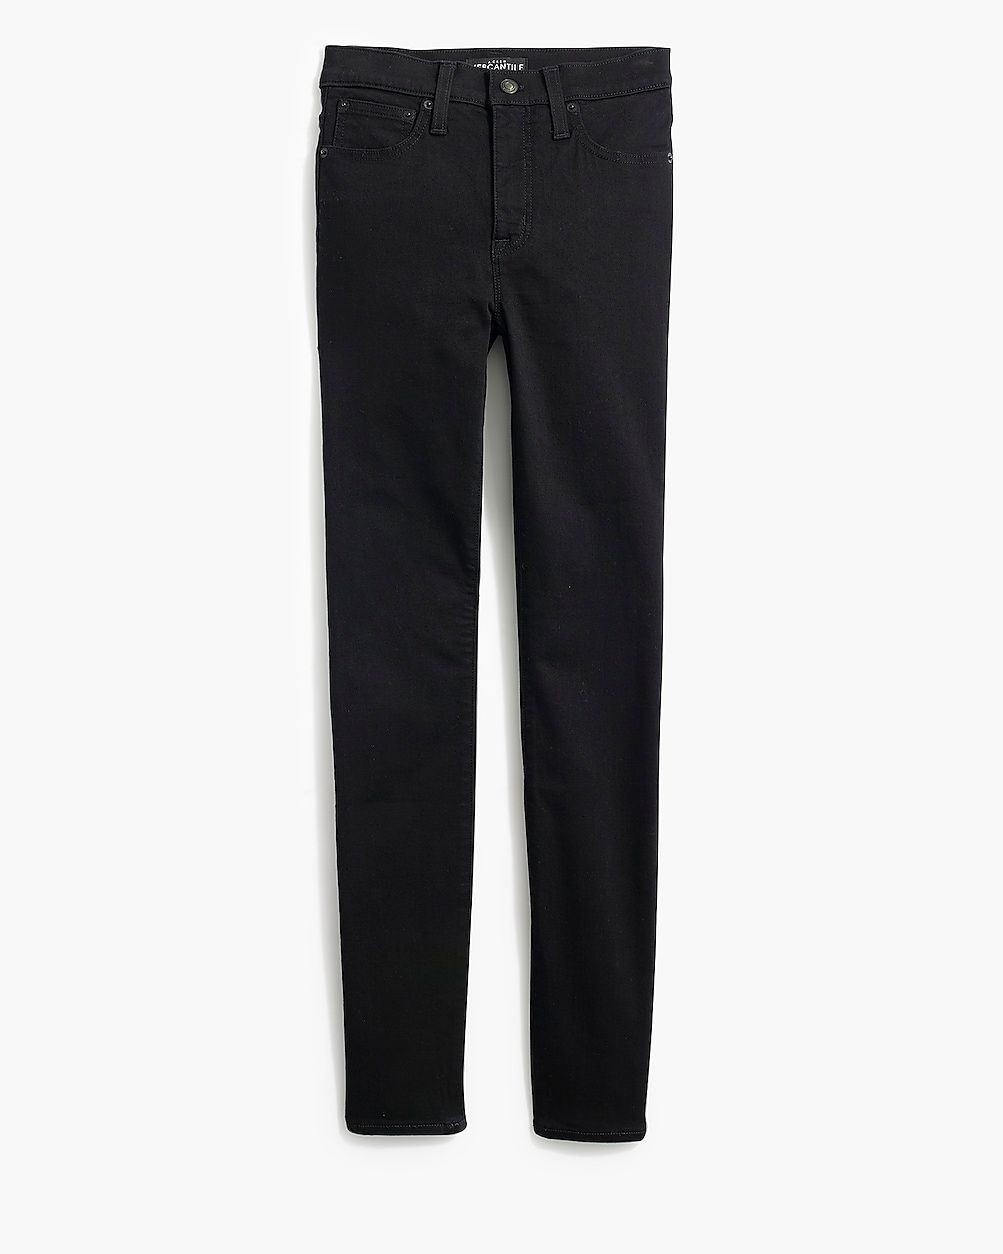 9" mid-rise black skinny jean in signature stretch | J.Crew Factory